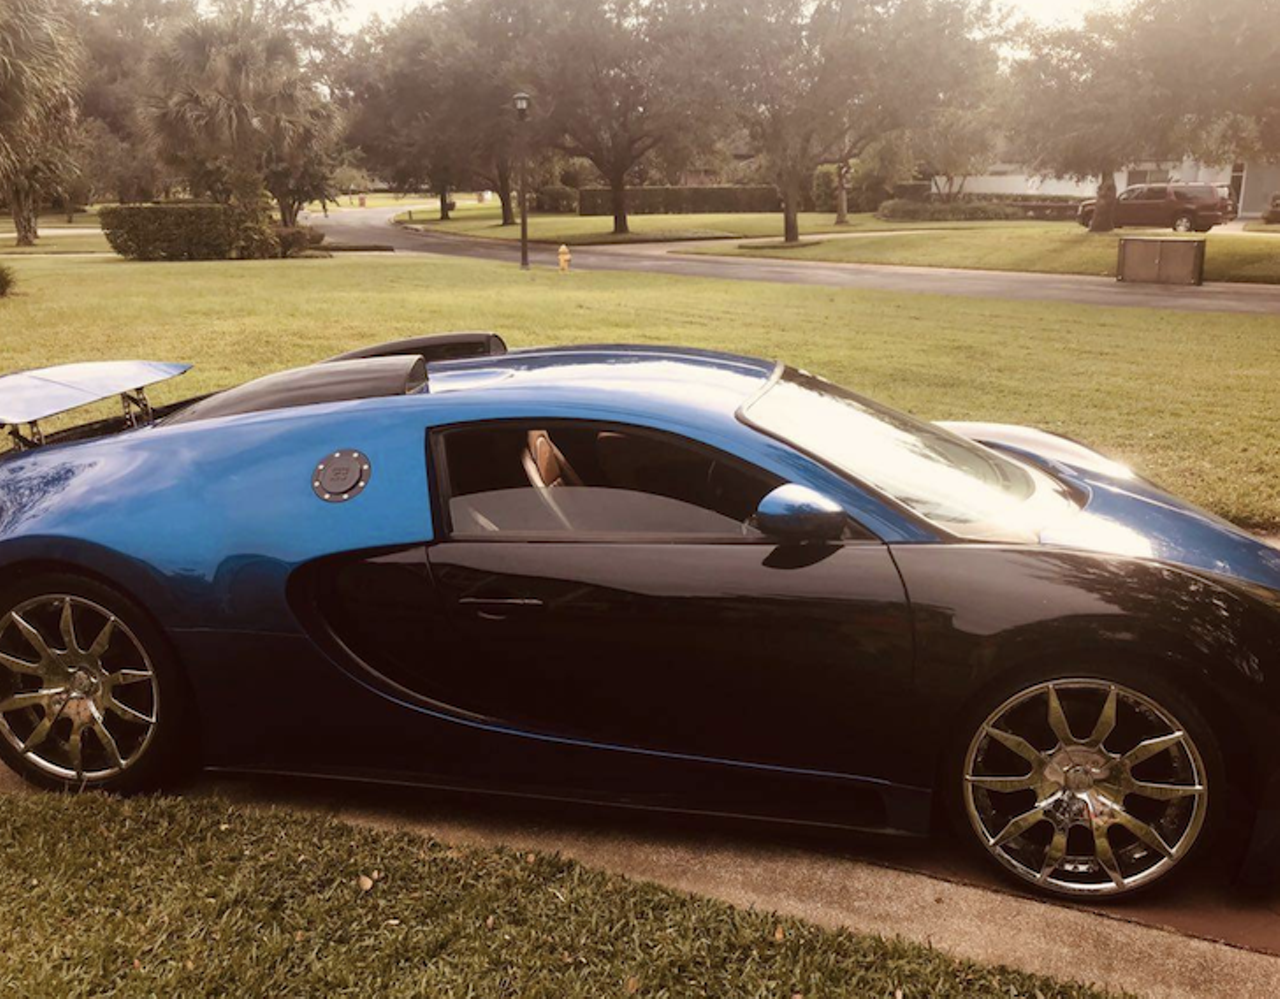 Florida man lists his Bugatti on Craigslist, but it's really just a Mercury